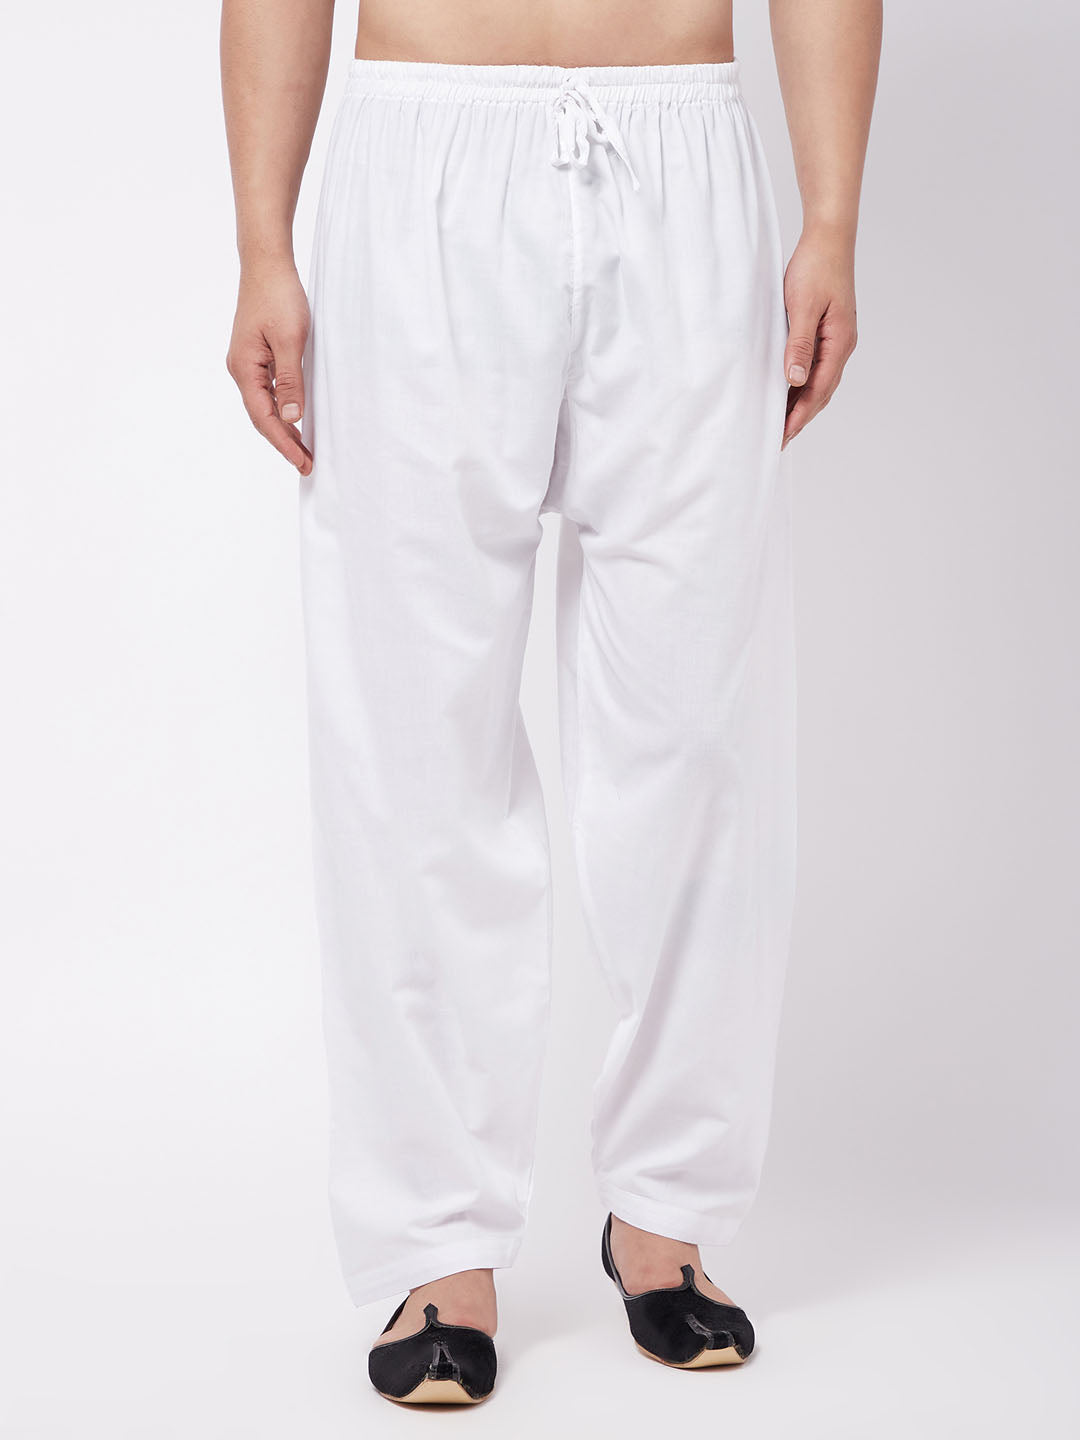 Eva Women's Solid Cotton Patiala Pants Combo Vol 17... | Patiala pants,  Pants for women, Patiala